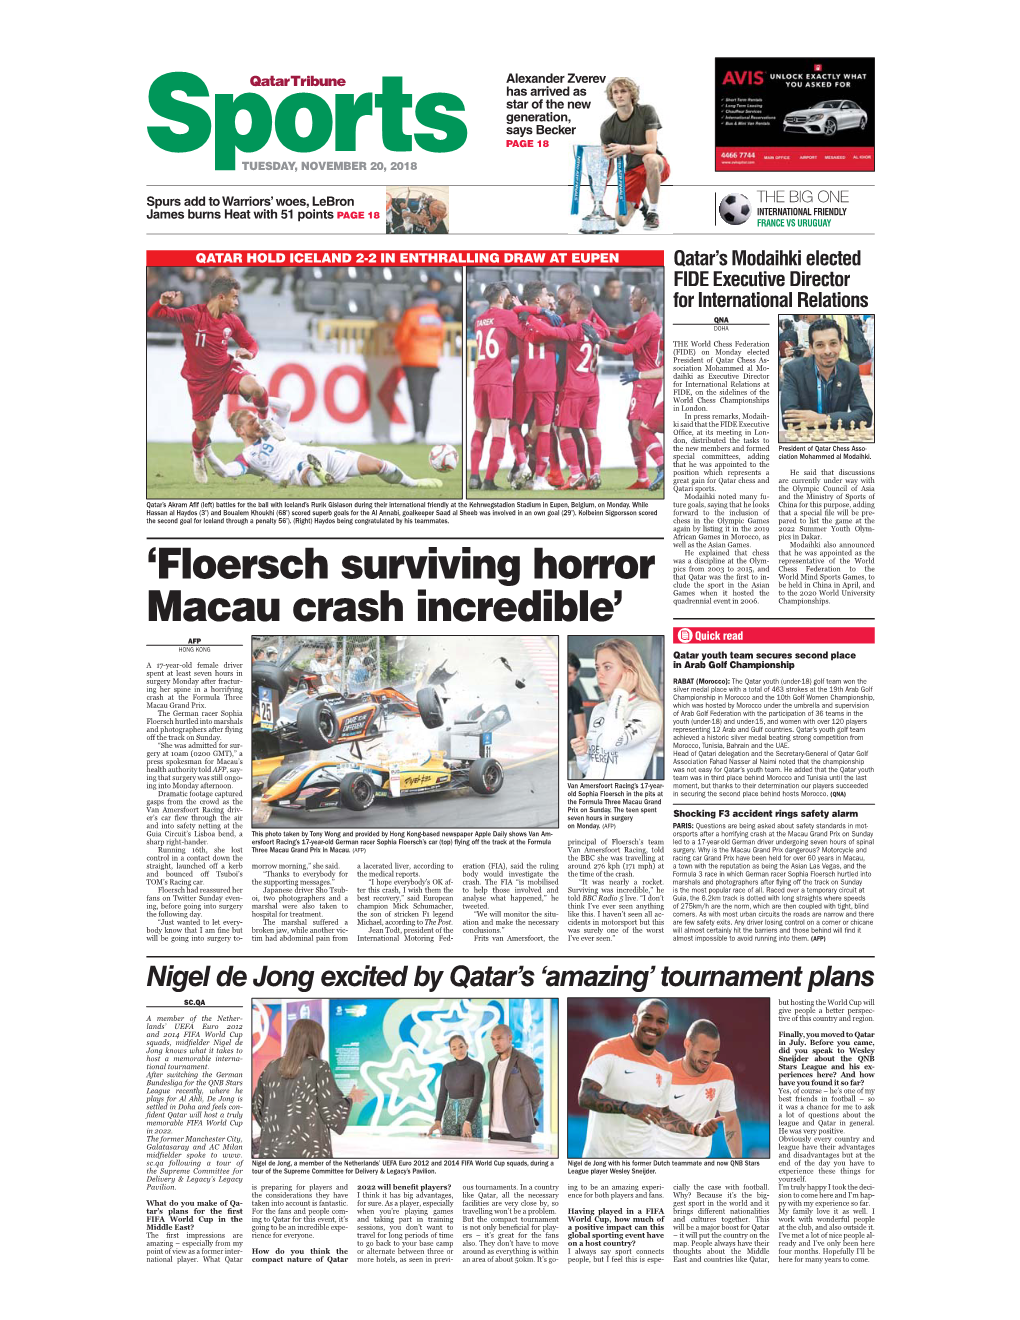 'Floersch Surviving Horror Macau Crash Incredible'